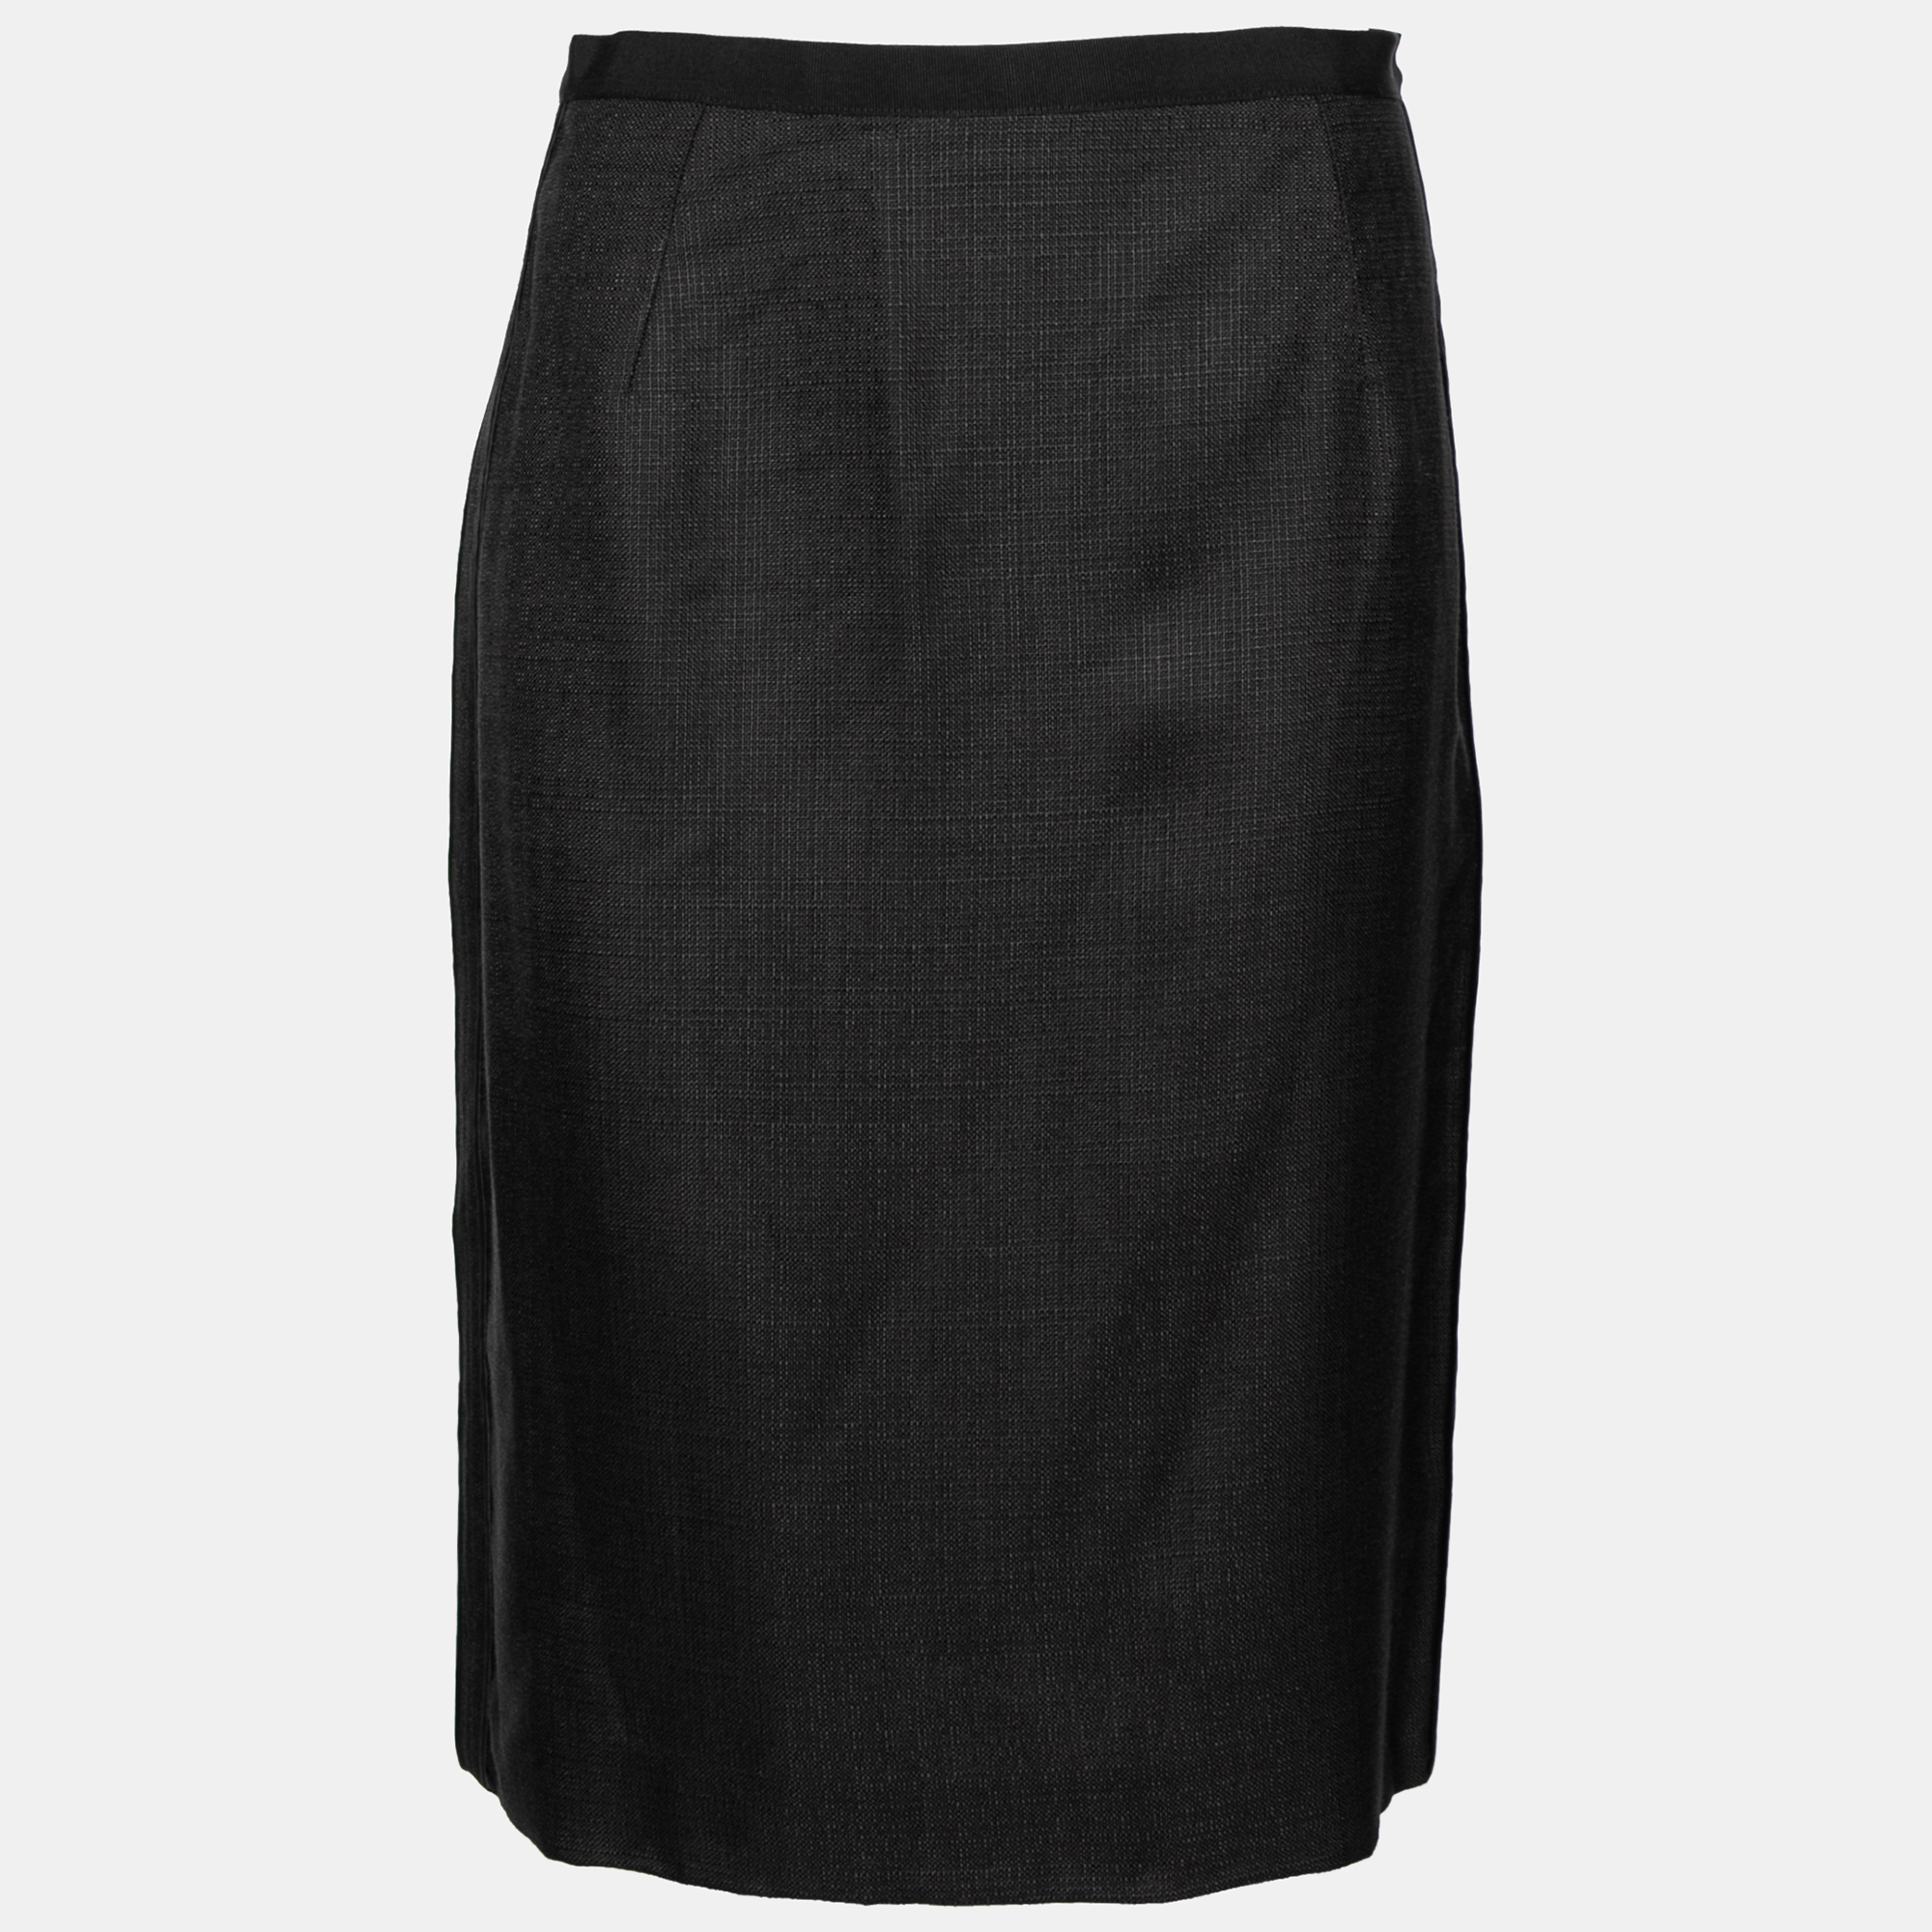 Dolce & gabbana black textured crepe pencil skirt m